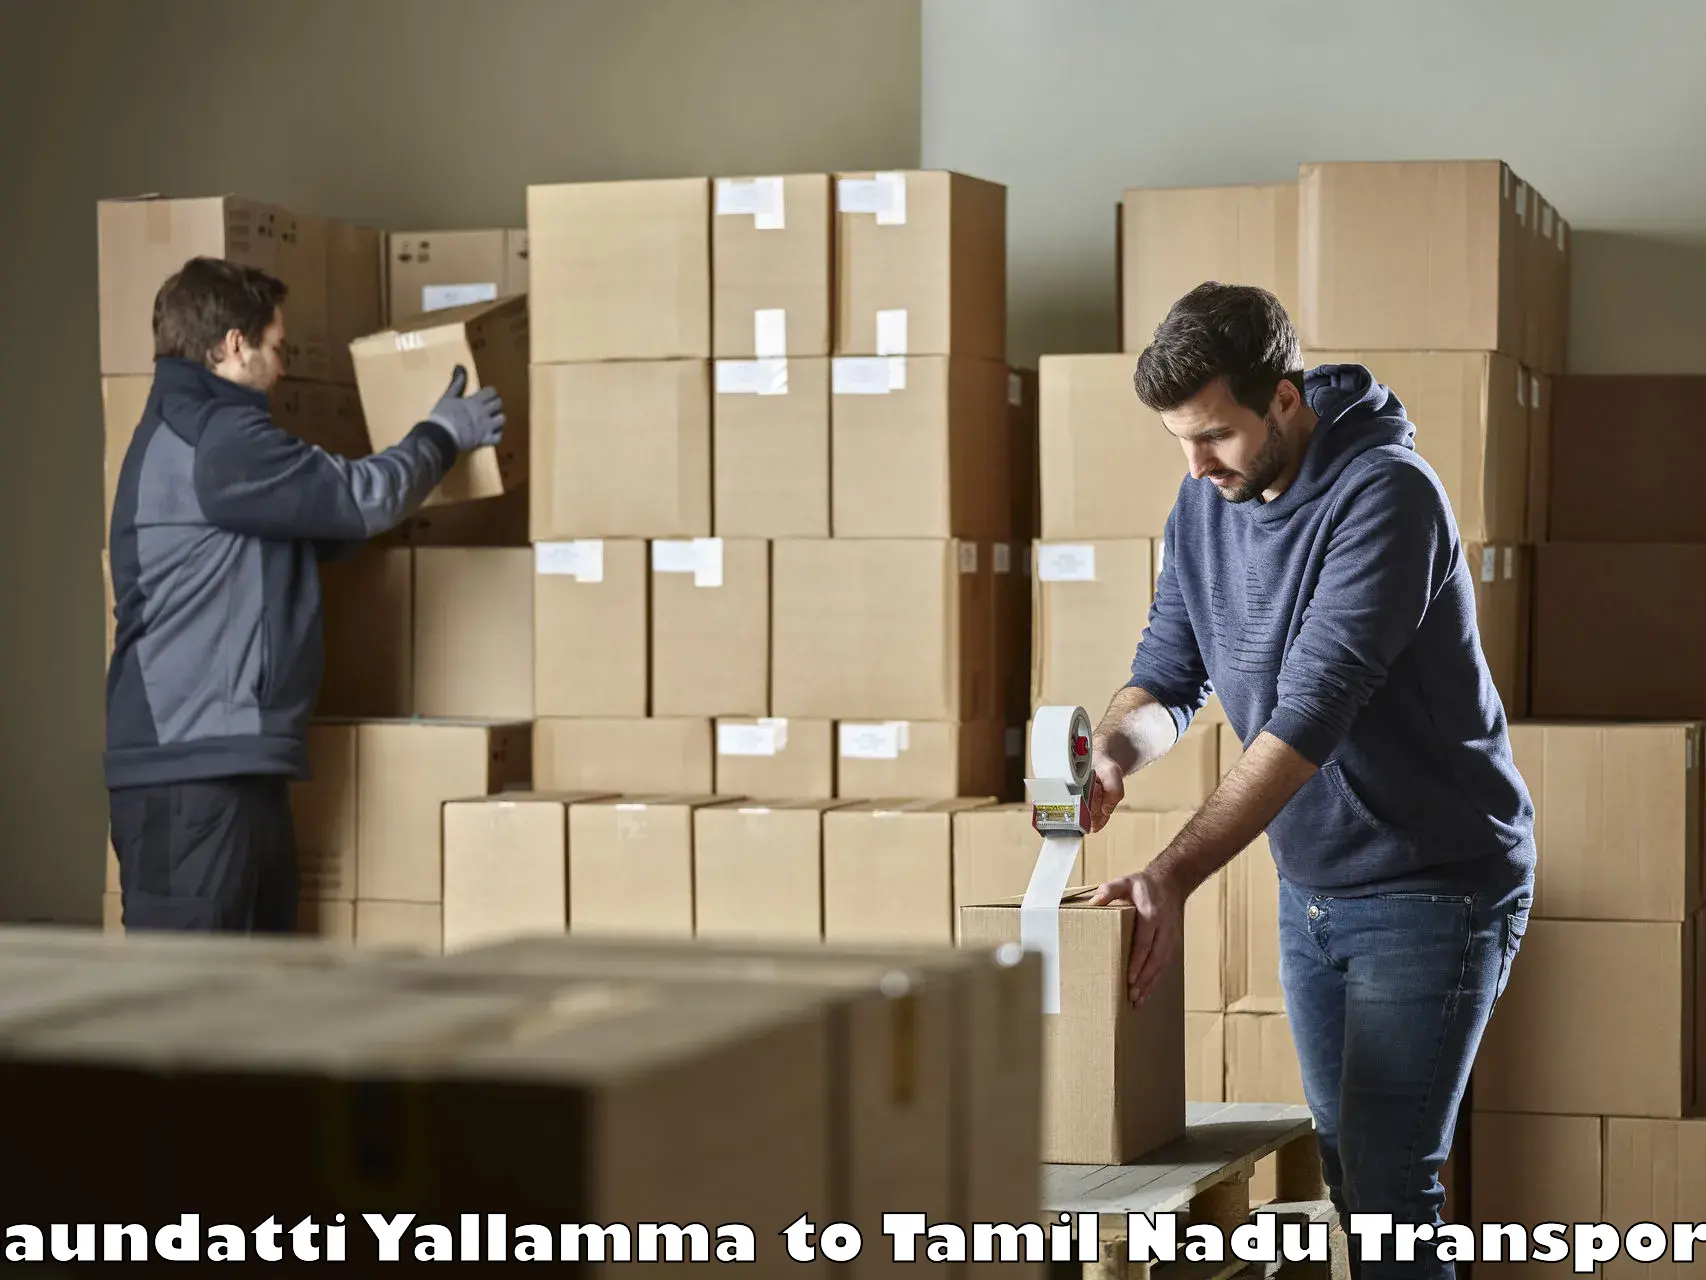 Daily parcel service transport Saundatti Yallamma to Mettala